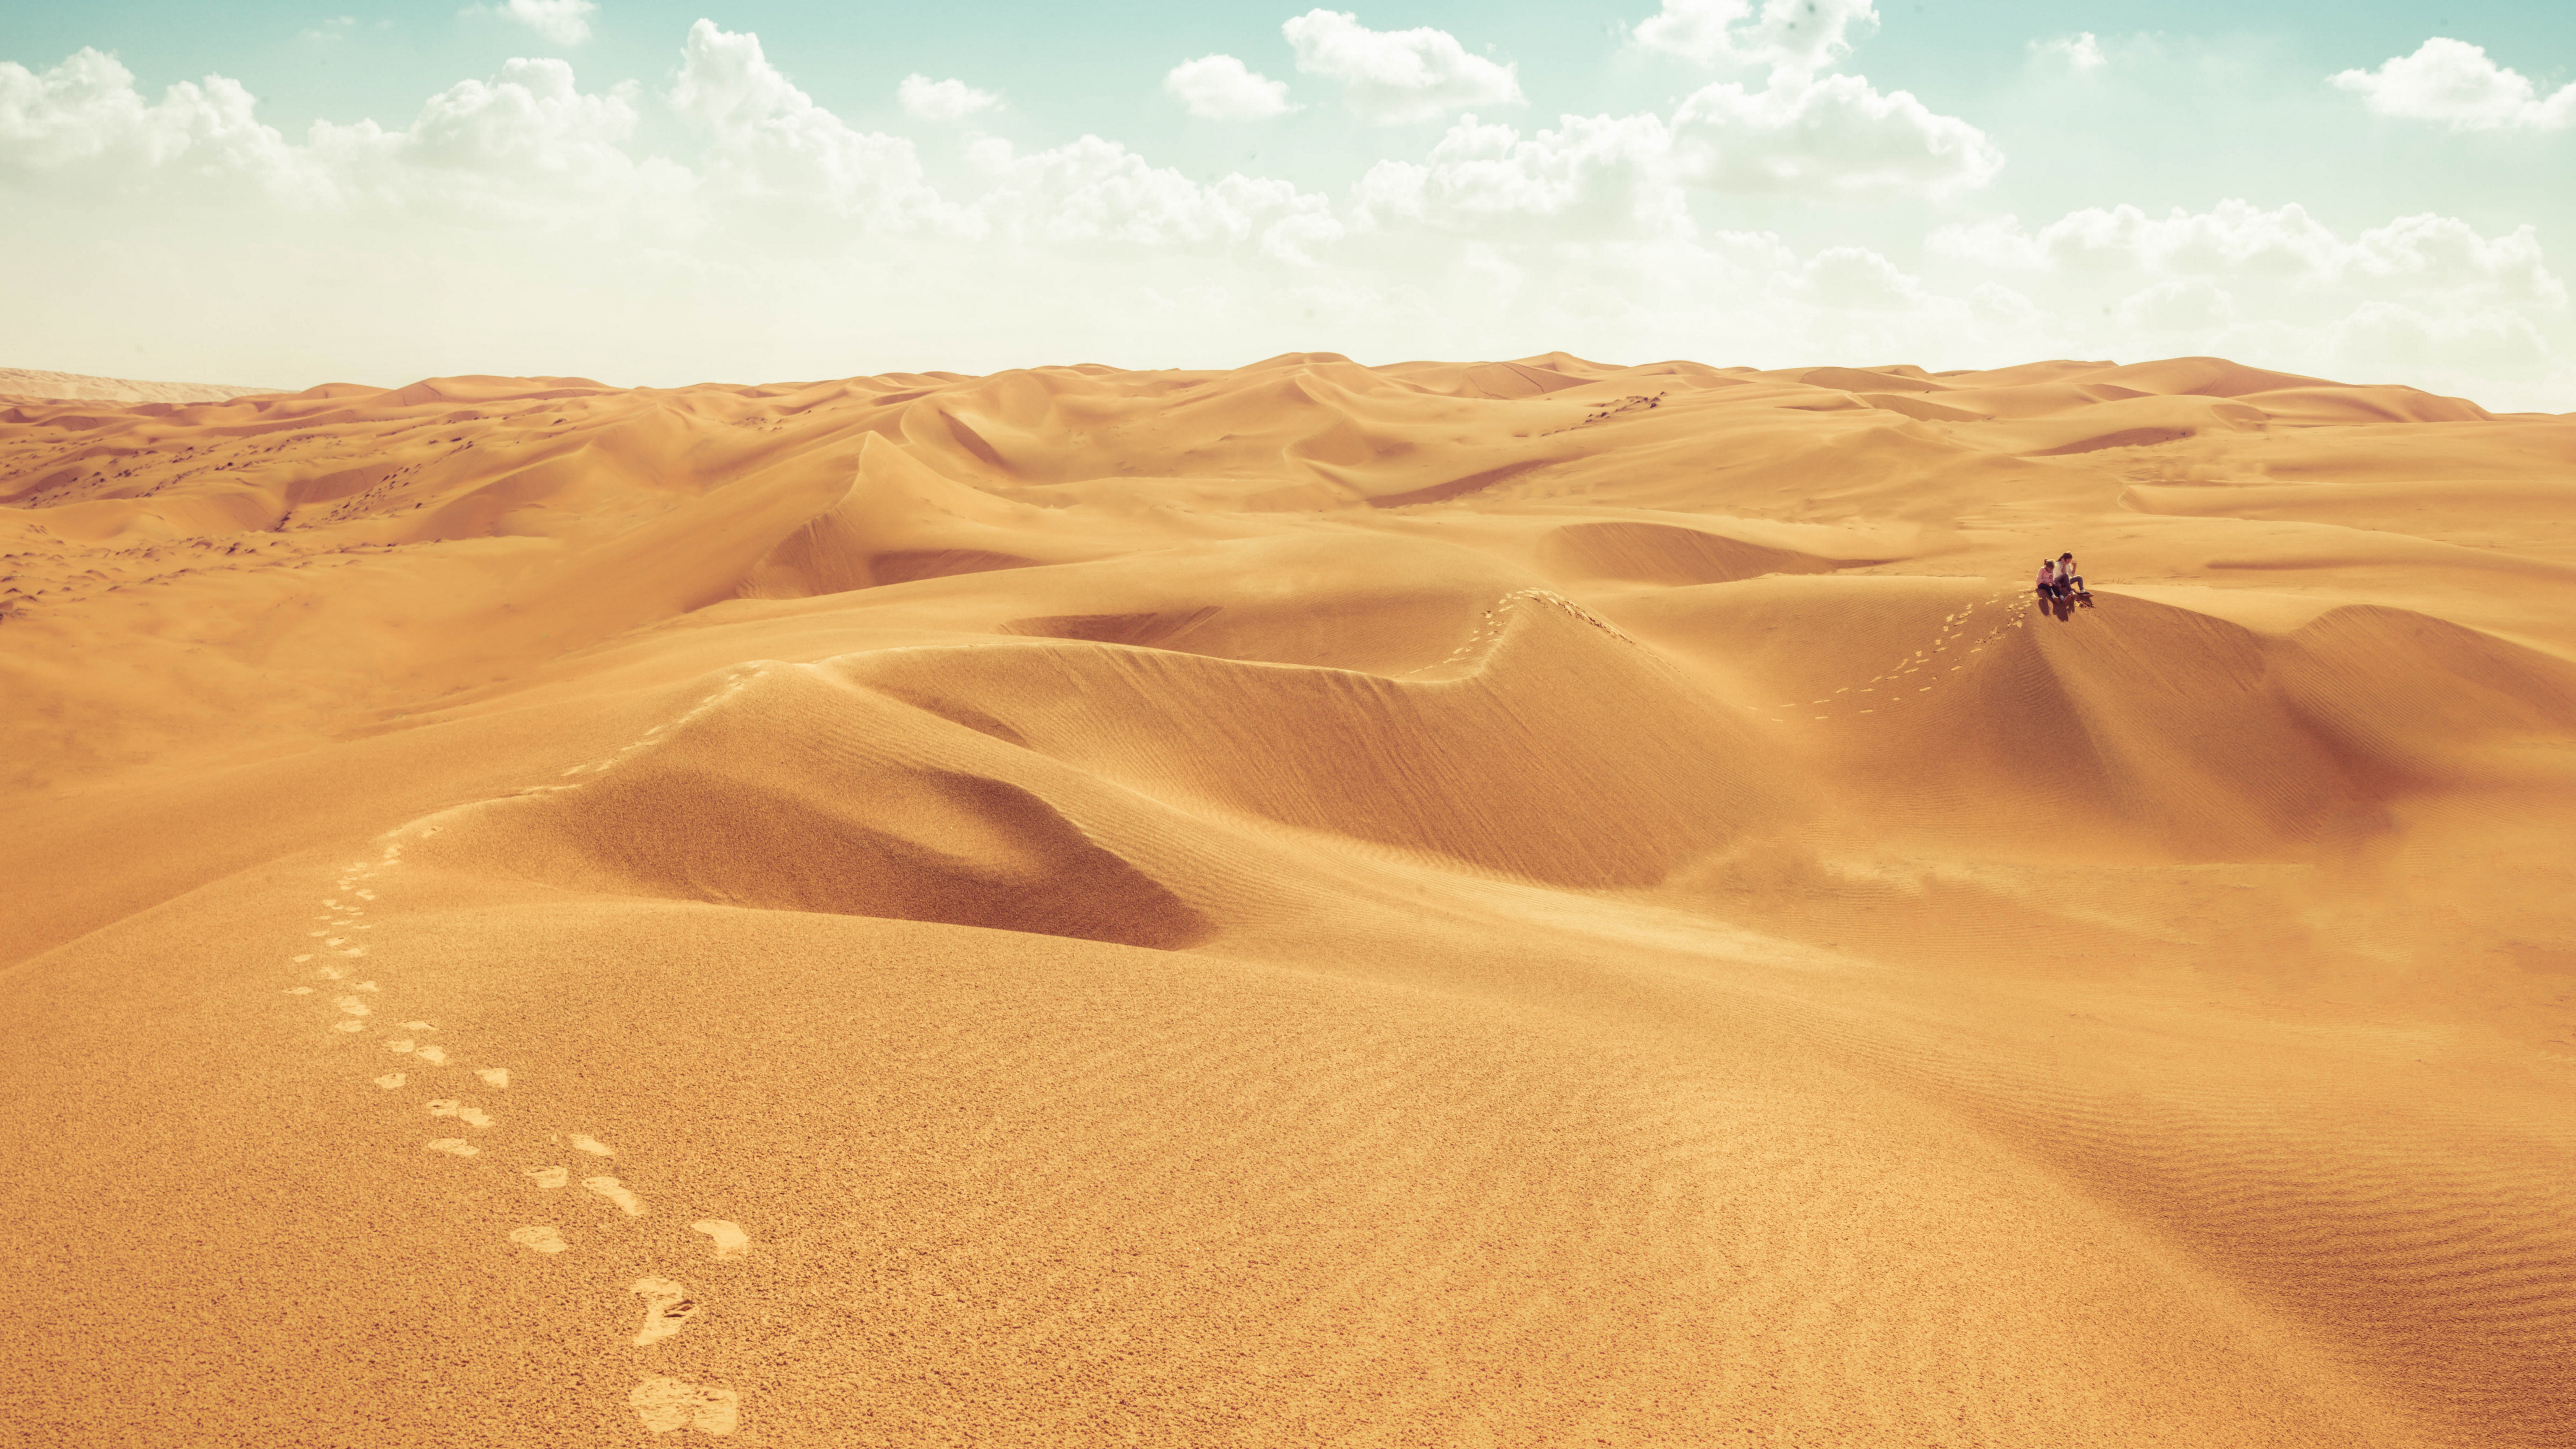 General 7680x4320 photography Trey Ratcliff landscape desert Oman sand